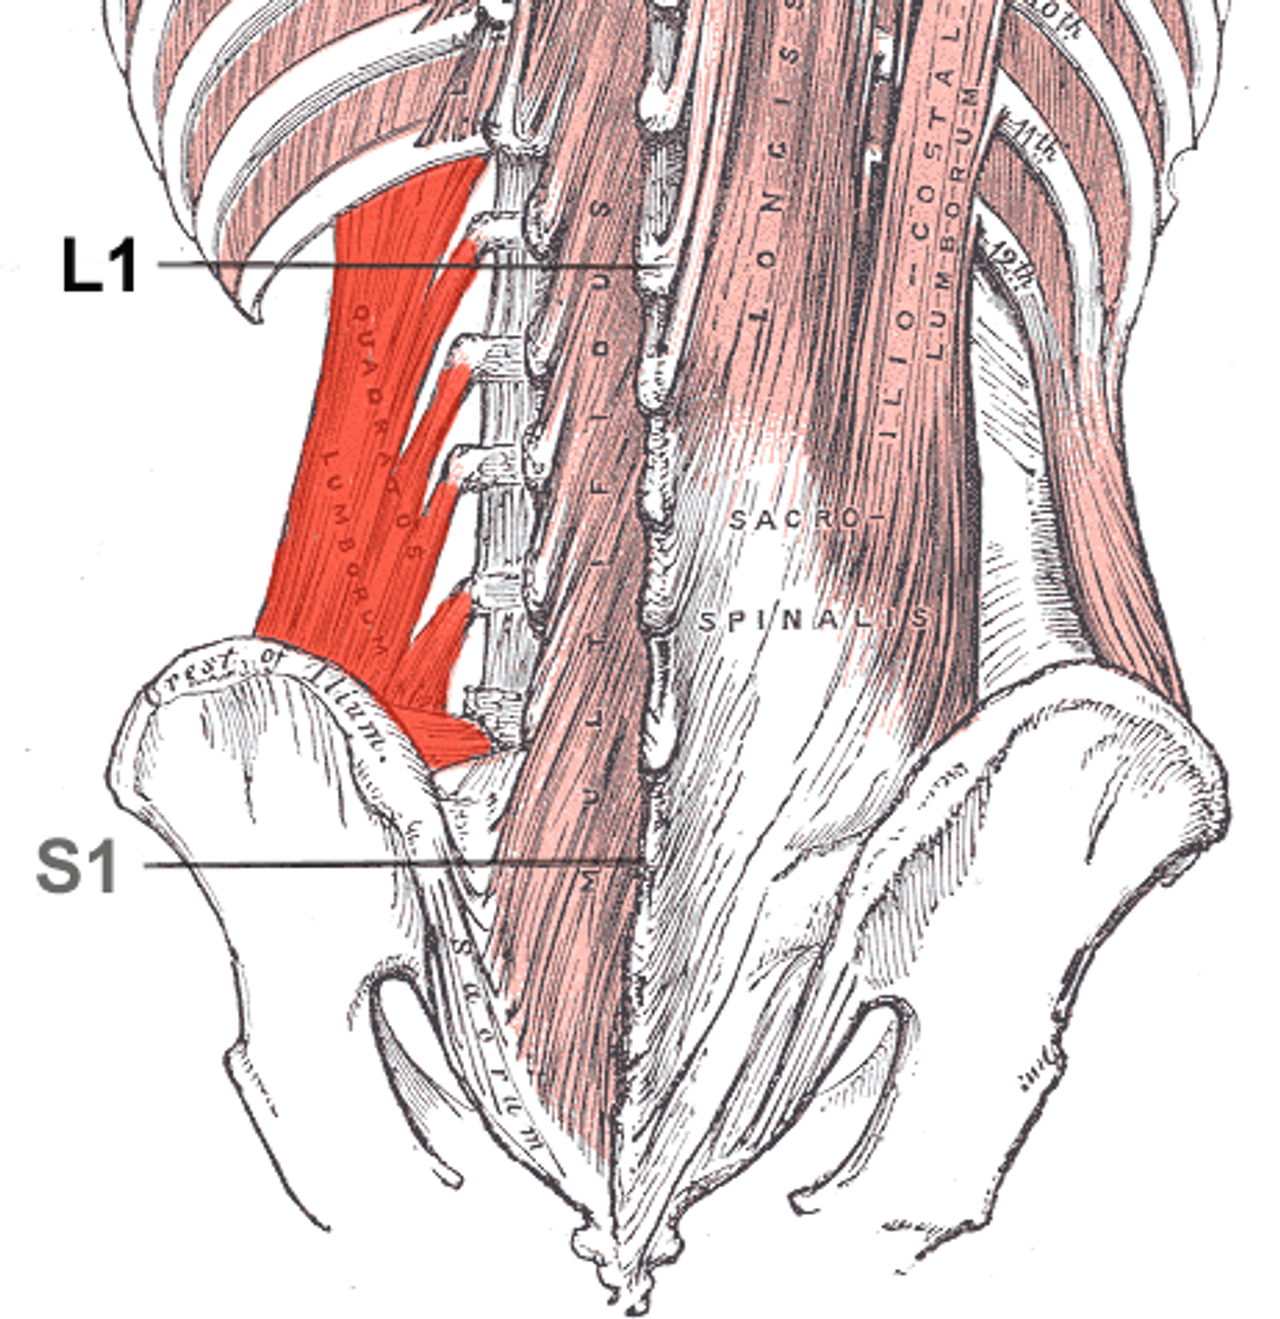 Illustration of the Quadratus Lumborum (bright red), and its investment in the 12th rib, transverse processes of the lumbar vertebrae, and posterior iliac spine.